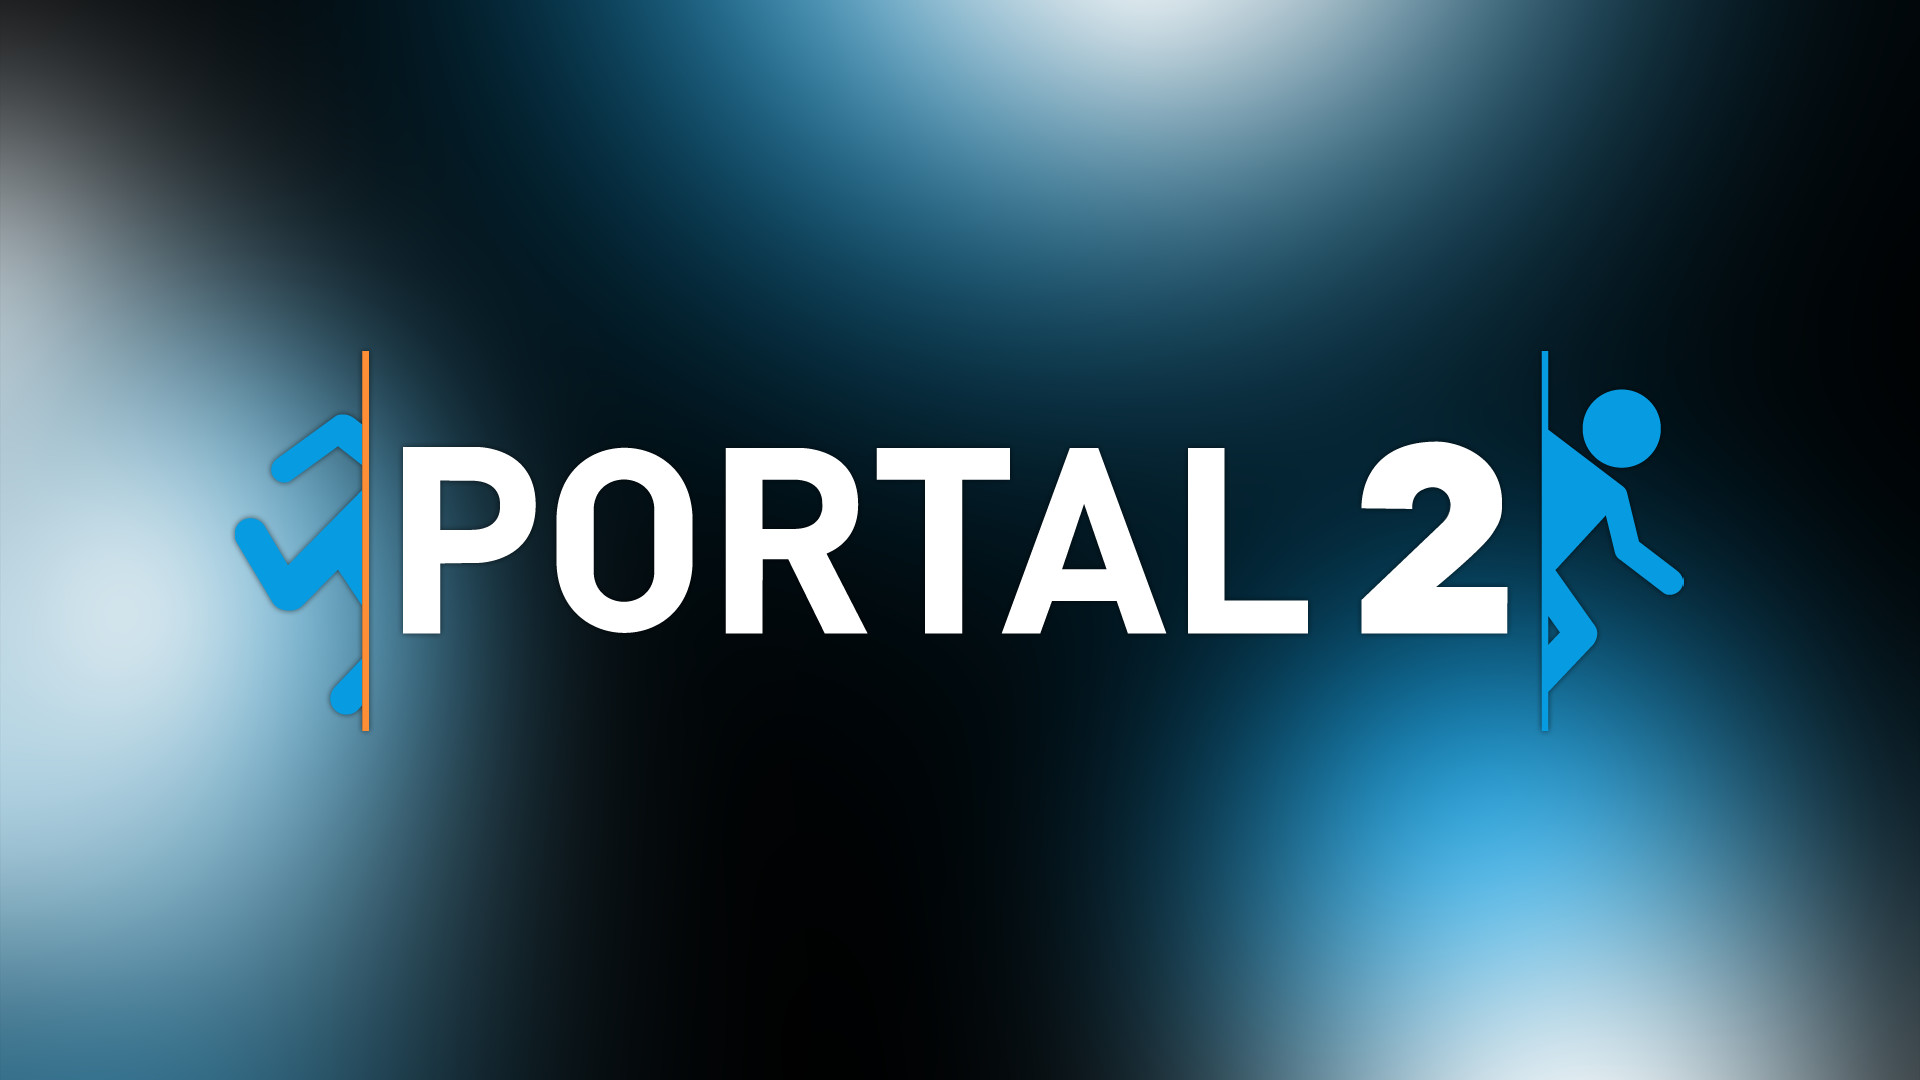 1920x1080 Portal 2 HD Wallpaper in Full HD from the Portal category.